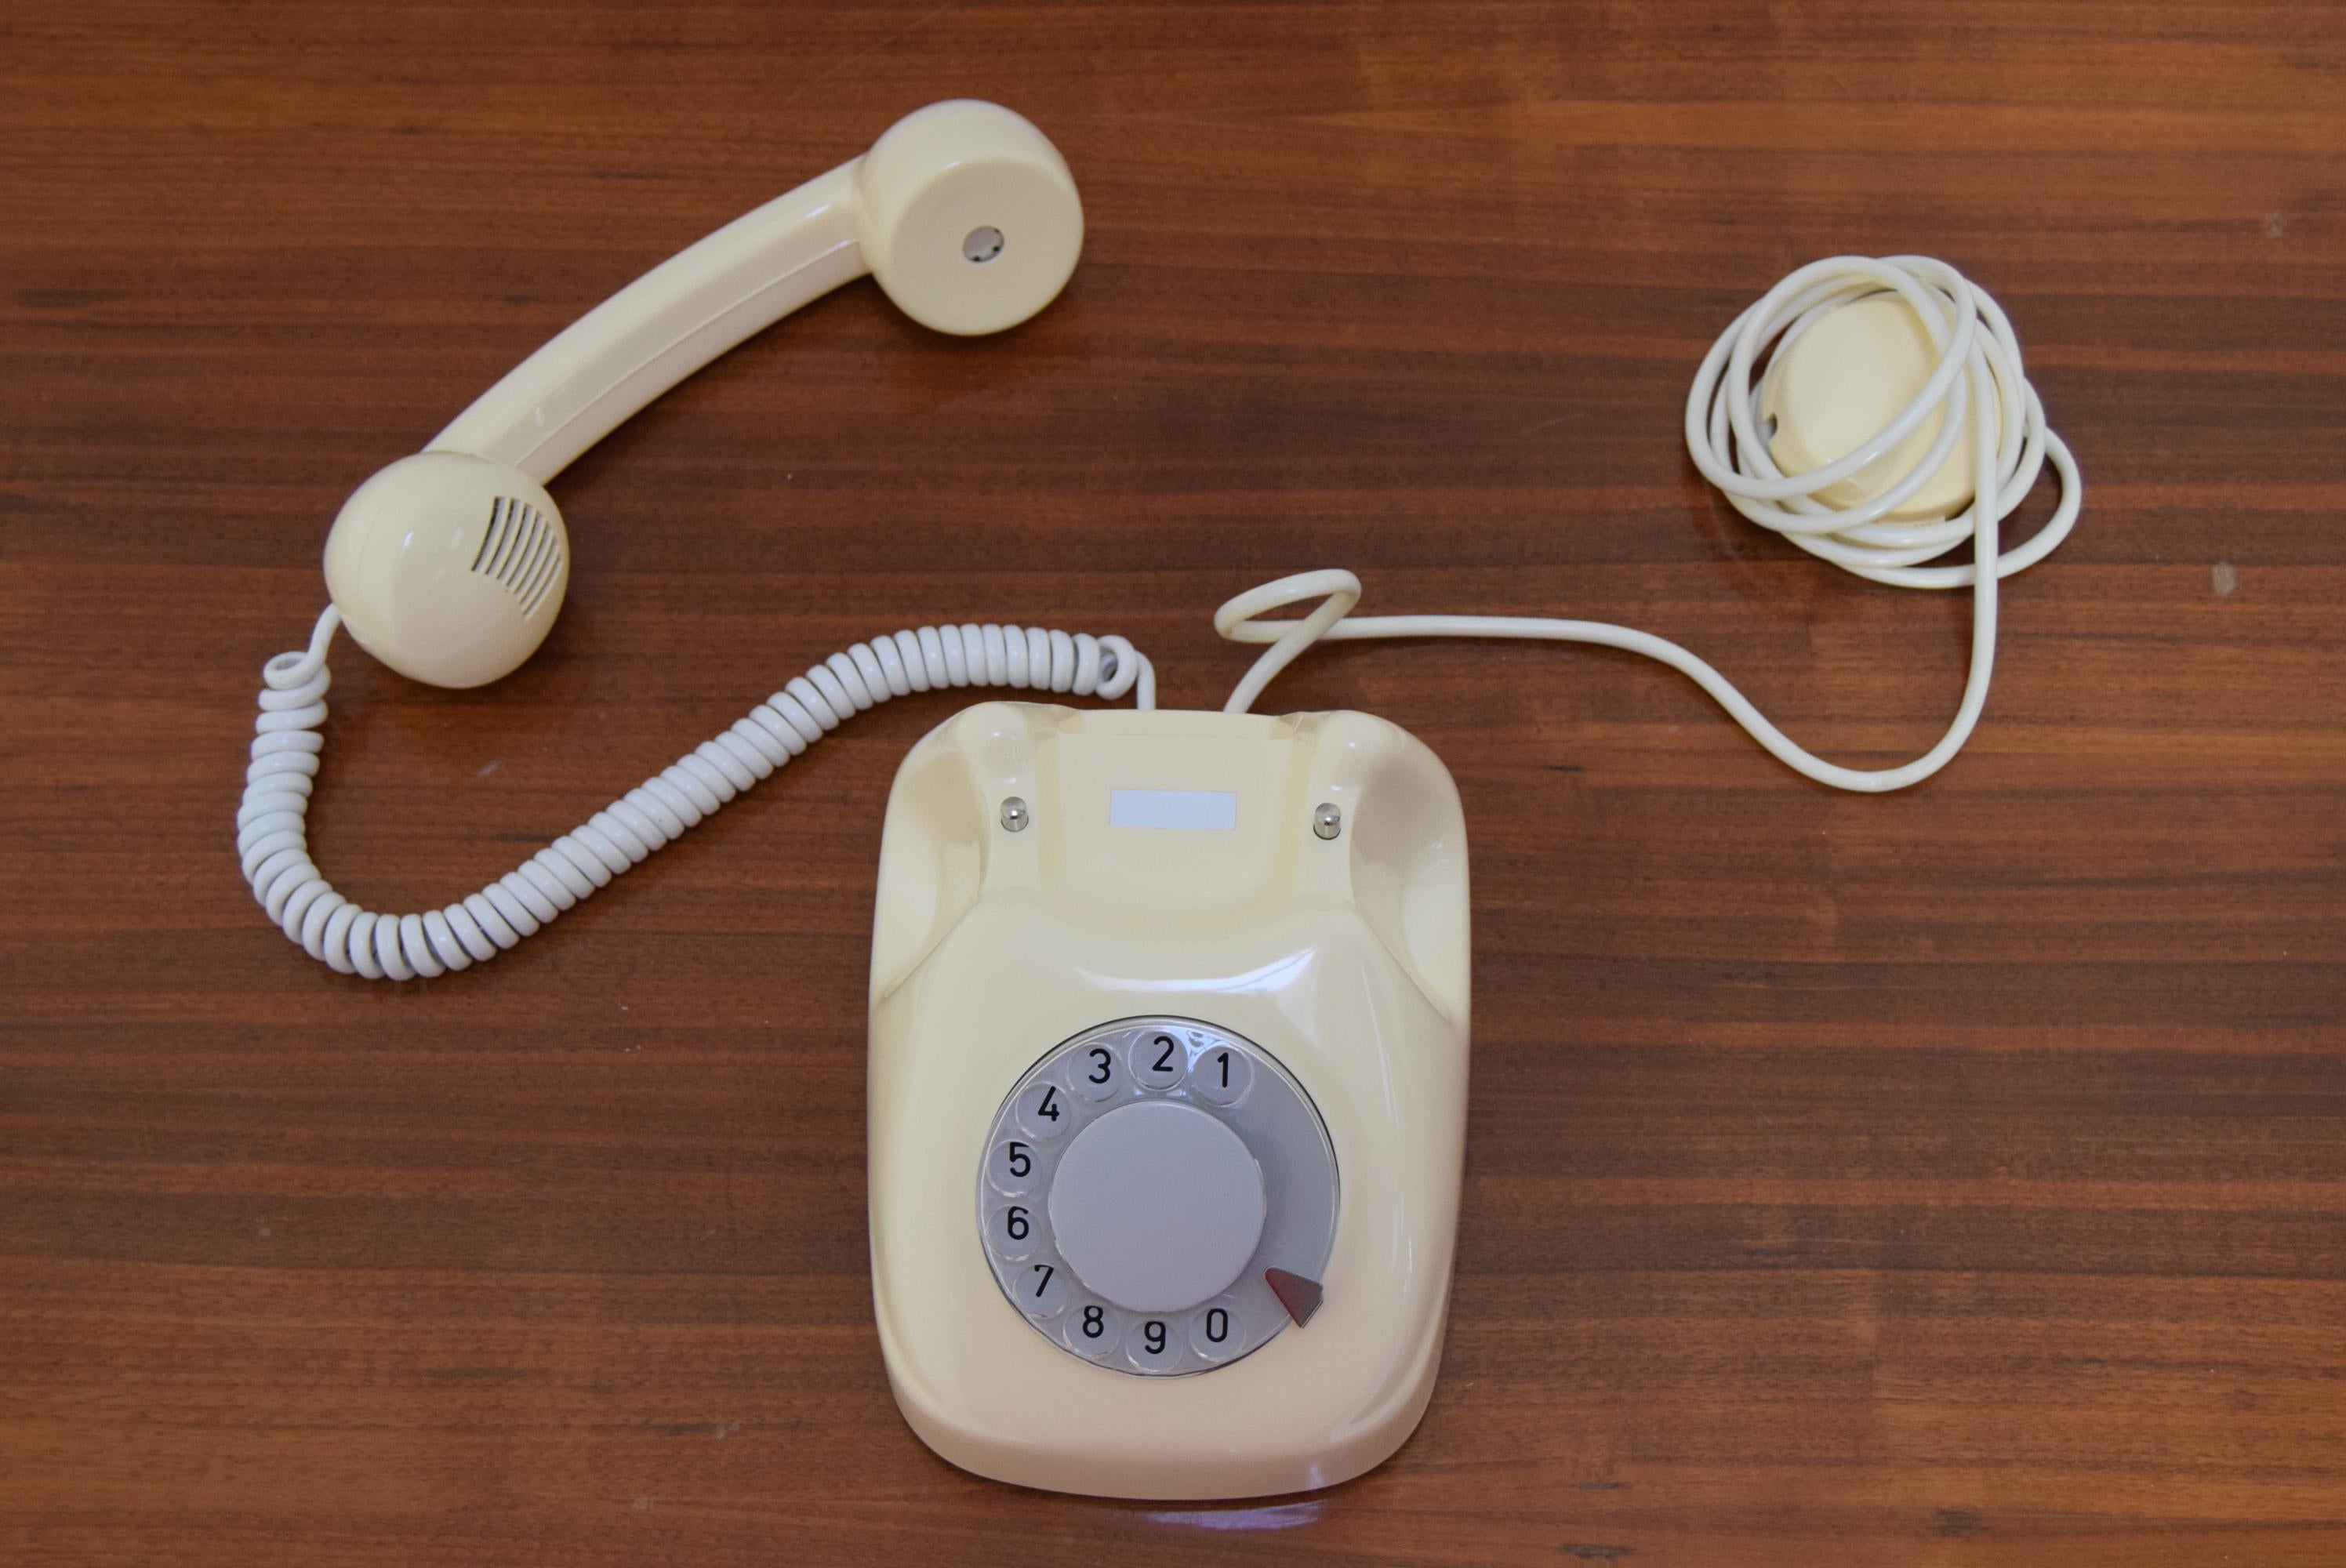 Plastic Mid-Century Design Telephone by Tesla, 1979